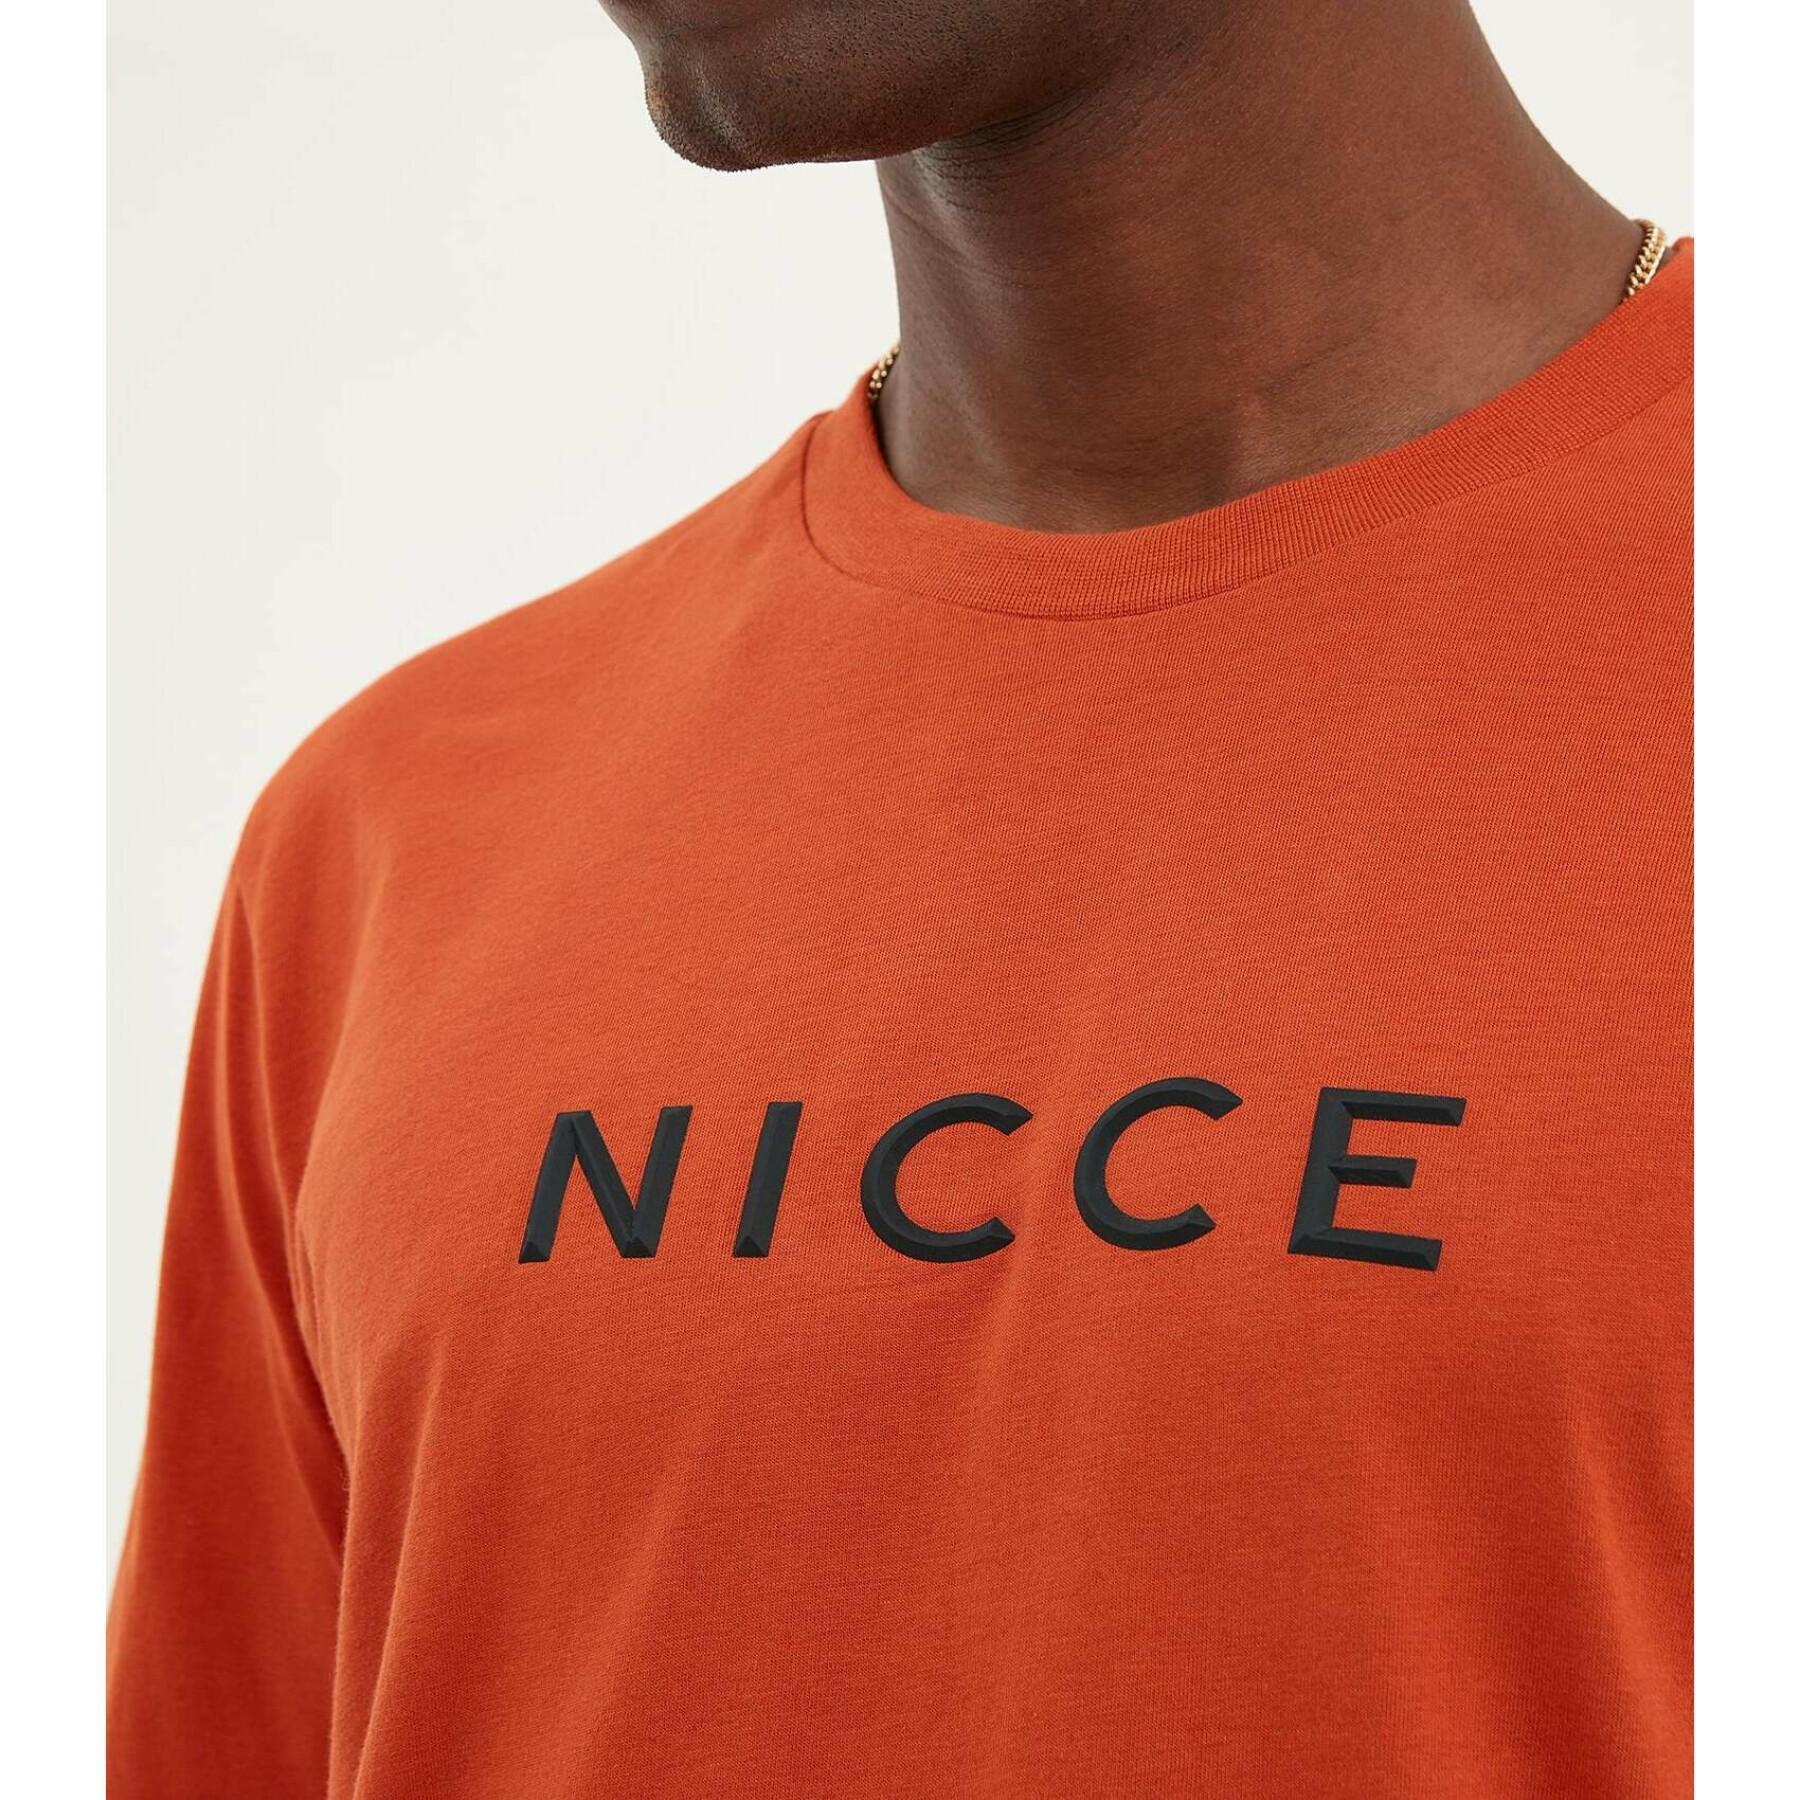 T-shirt Nicce Compact